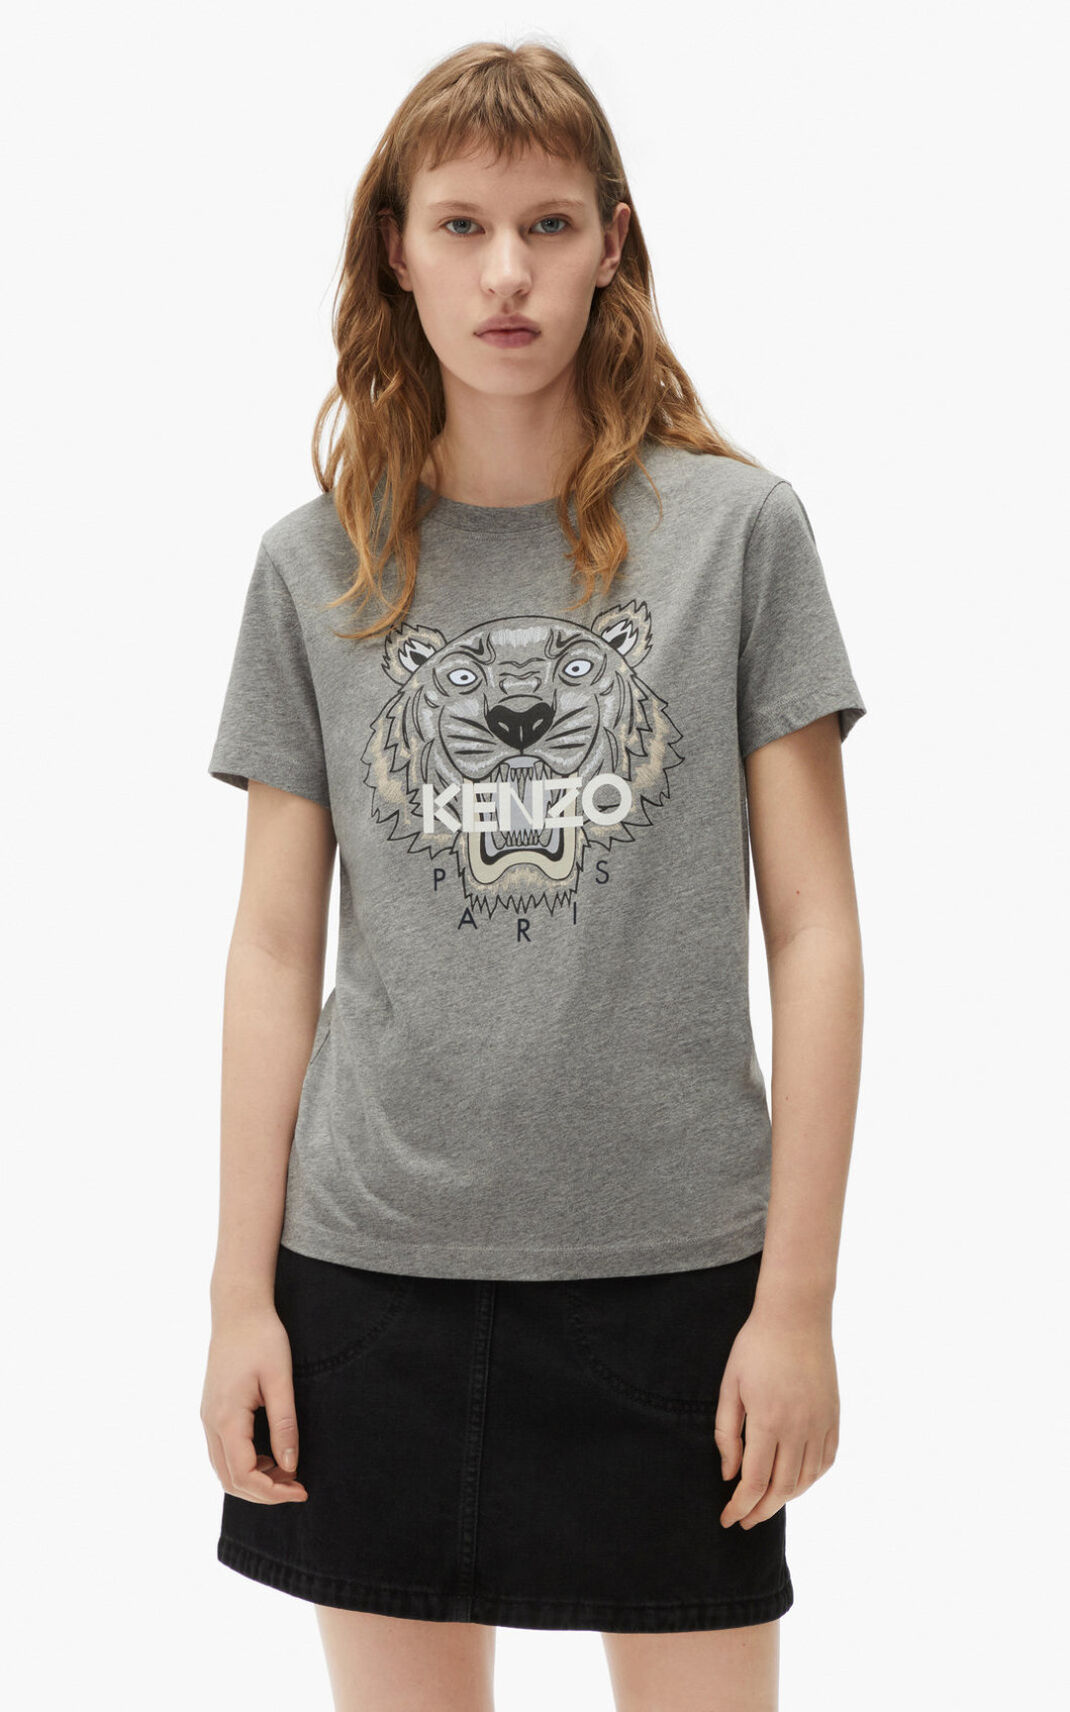 Camisetas Kenzo Tiger Mujer Gris - SKU.7158885